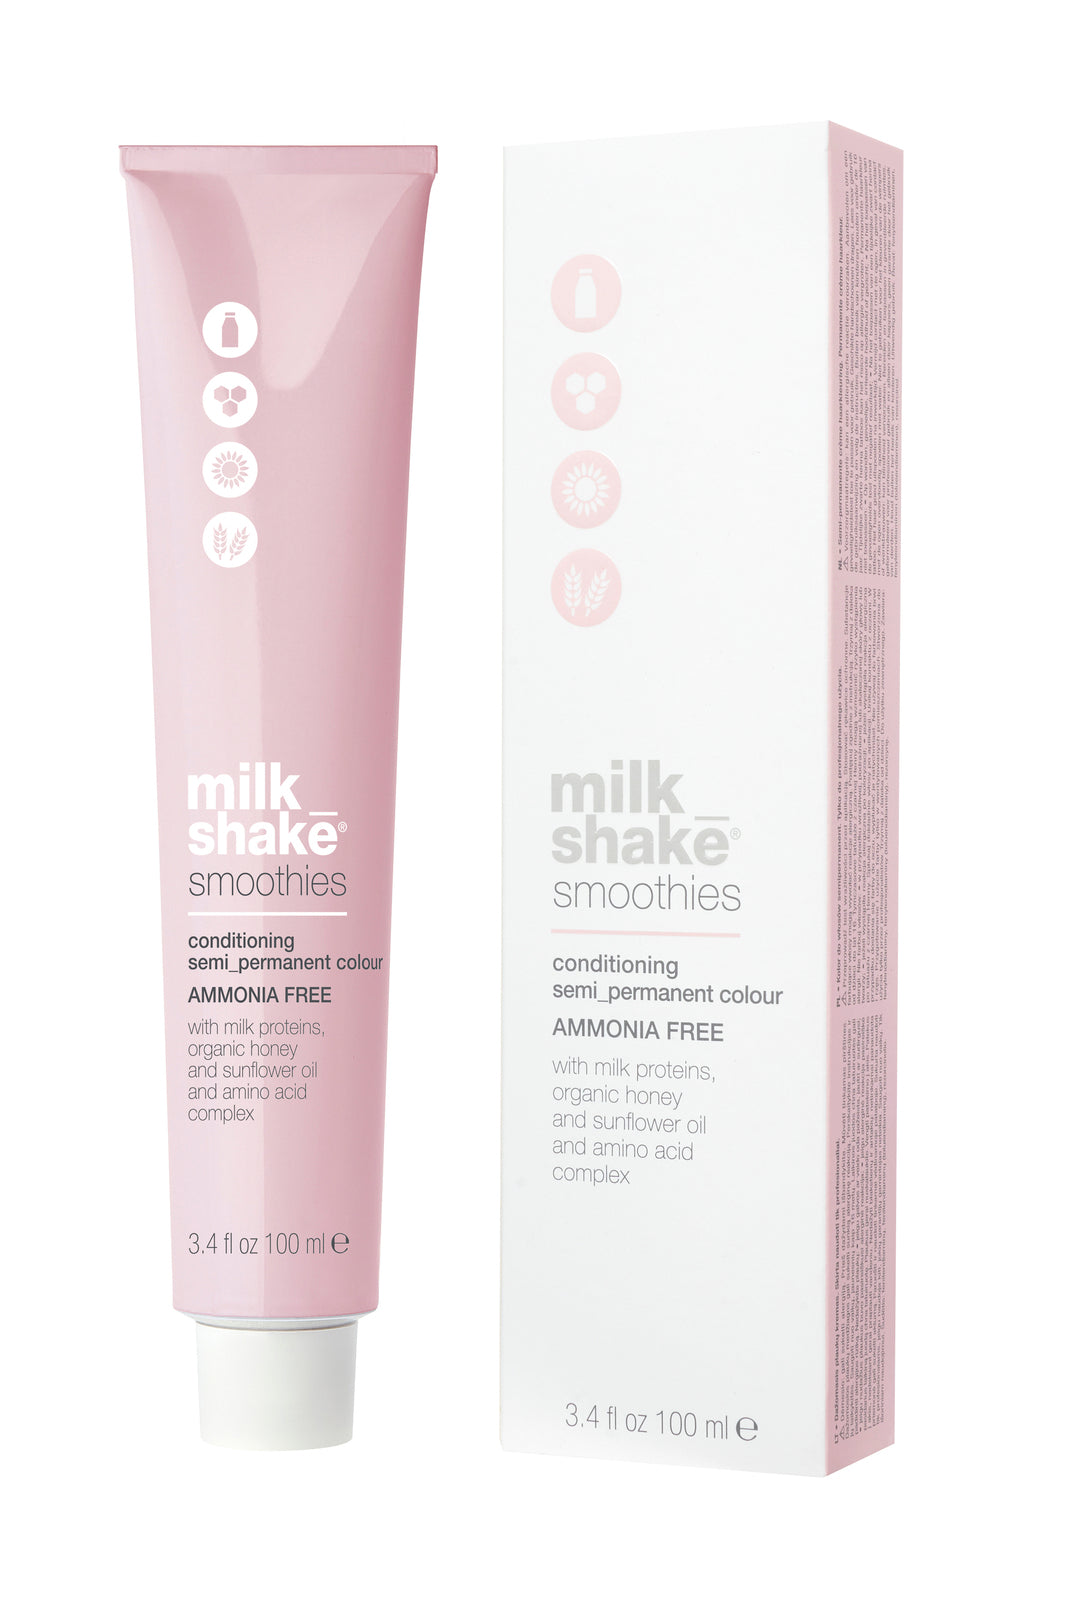 Milkshake smoothies semi-permanent color 3